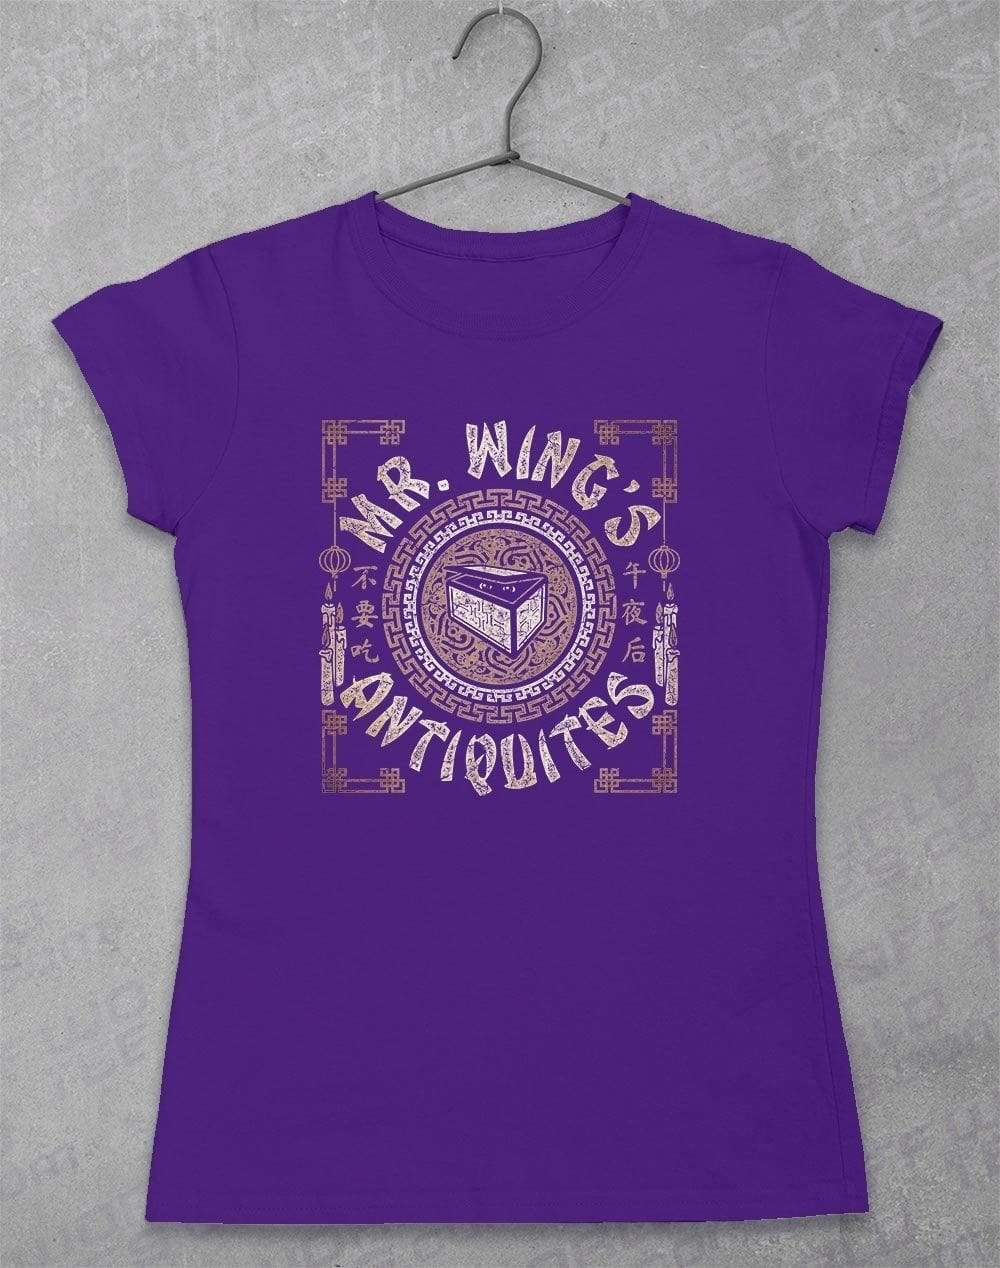 Mr Wing's Antiquities Women's T-Shirt  - Off World Tees